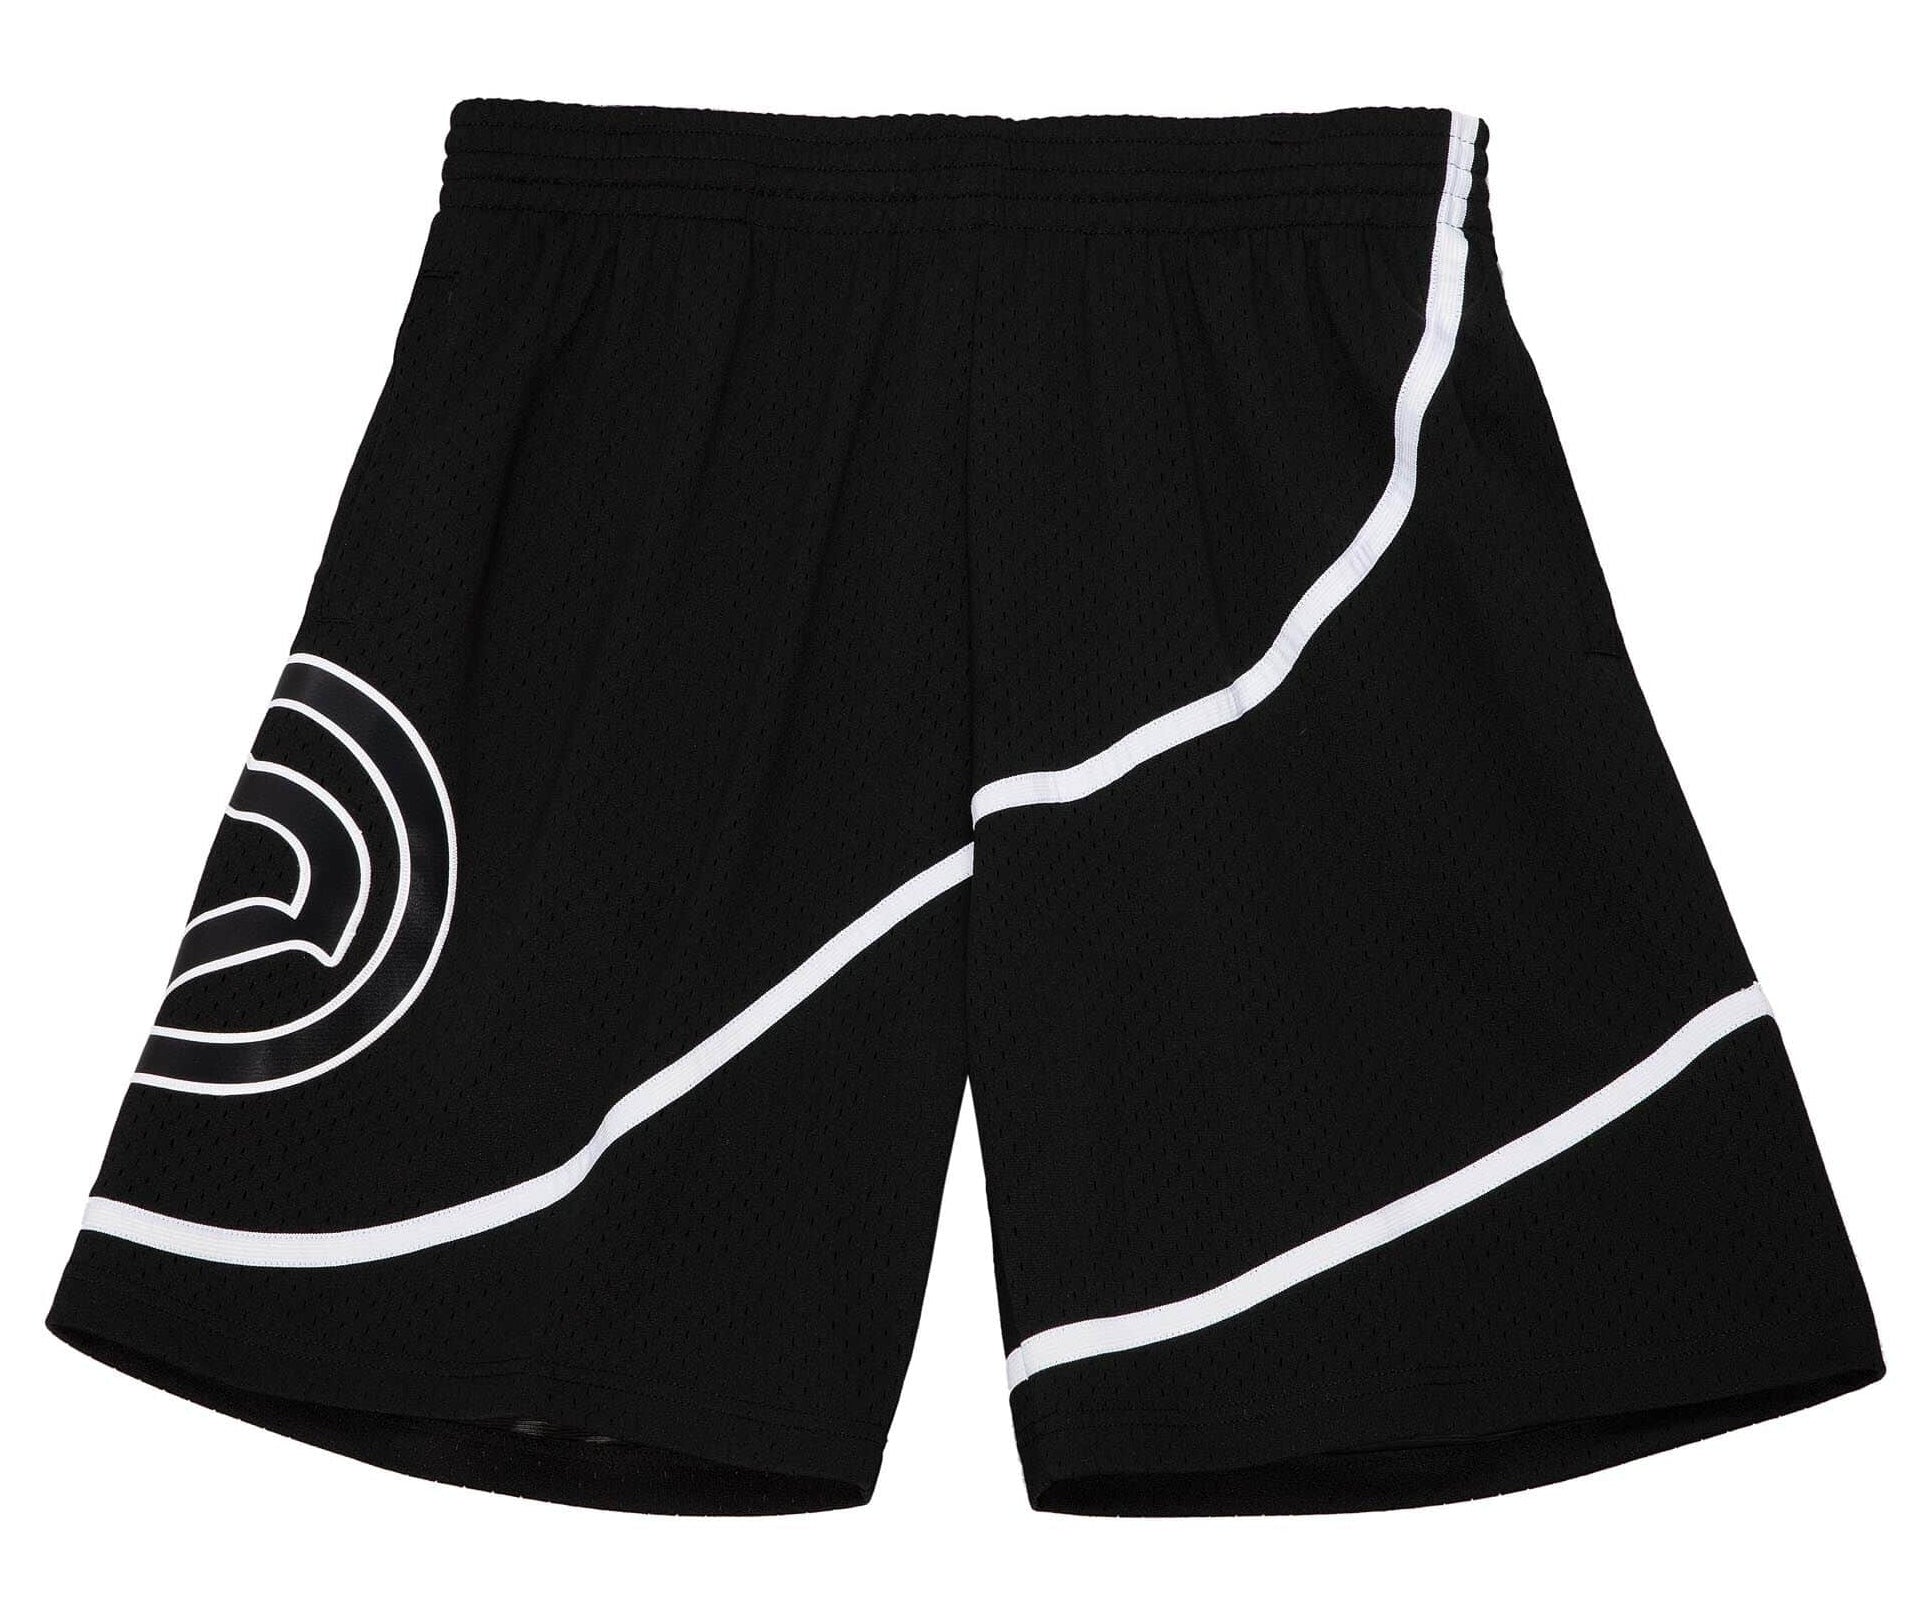 Atlanta Hawks Nike Icon Swingman Shorts - Mens